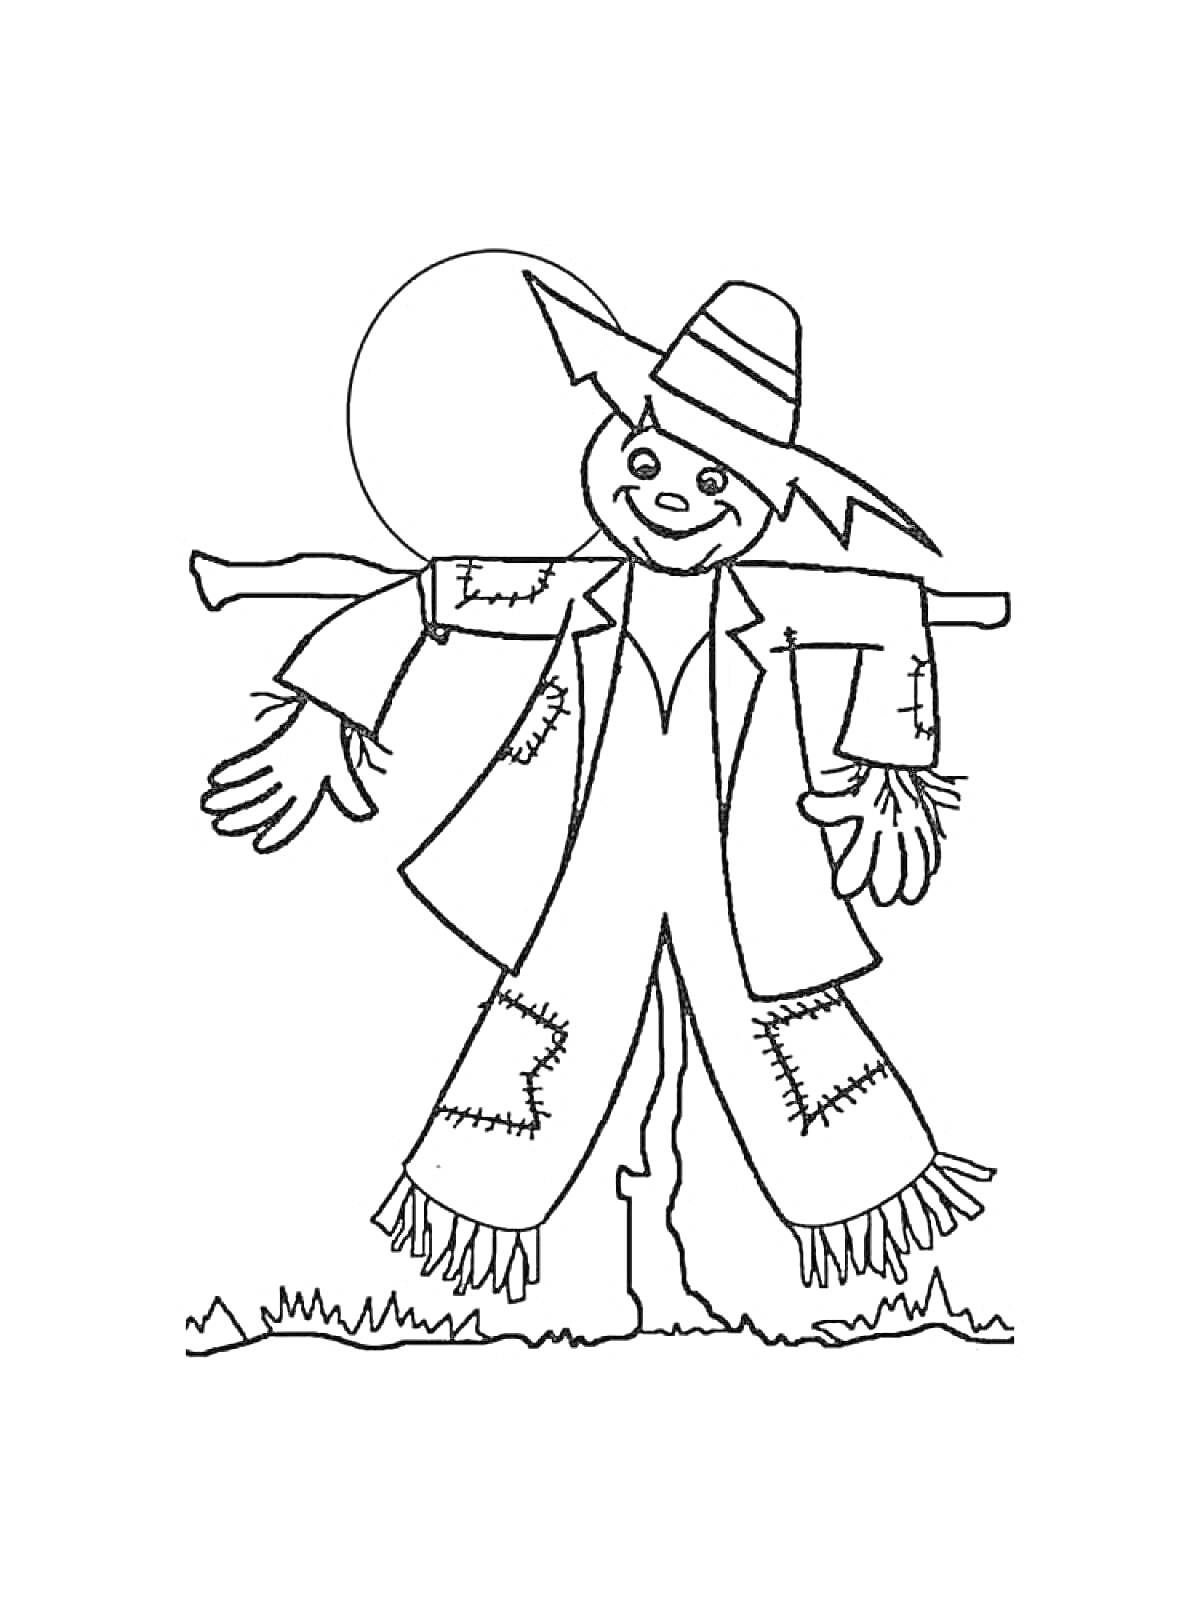 Раскраска Чучело в шляпе и заплатках на палке с фоном солнца в траве